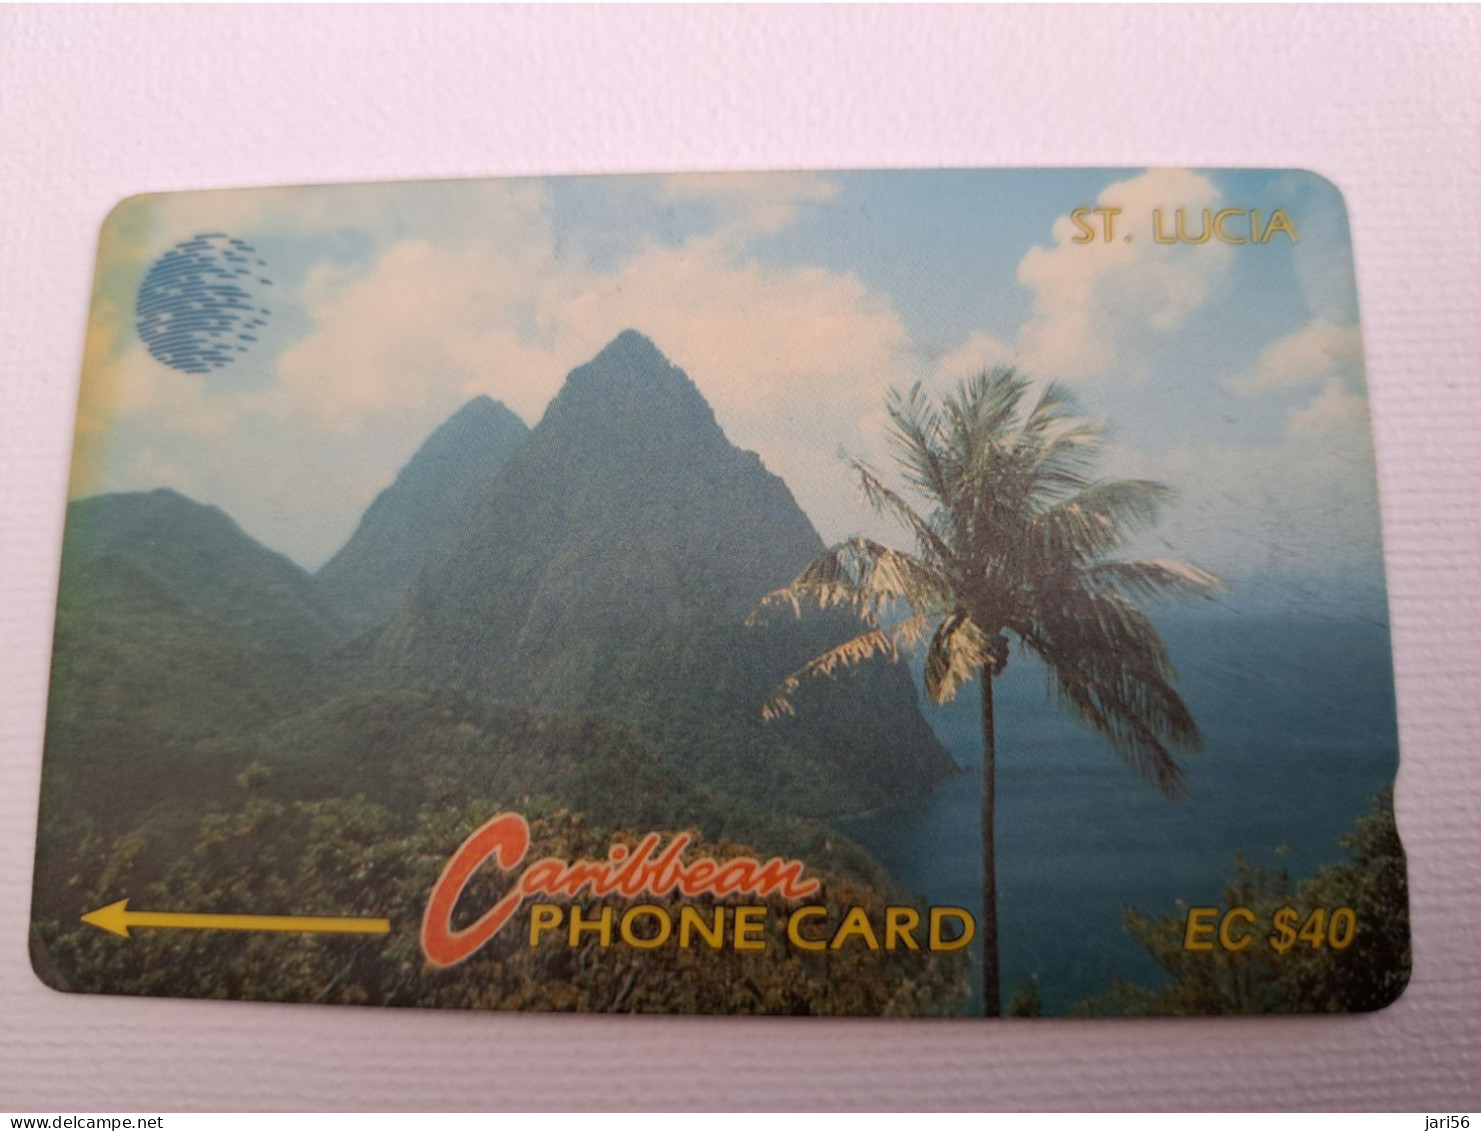 ST LUCIA    $ 40  CABLE & WIRELESS  STL-9C  9CSLC      Fine Used Card ** 13524** - Saint Lucia